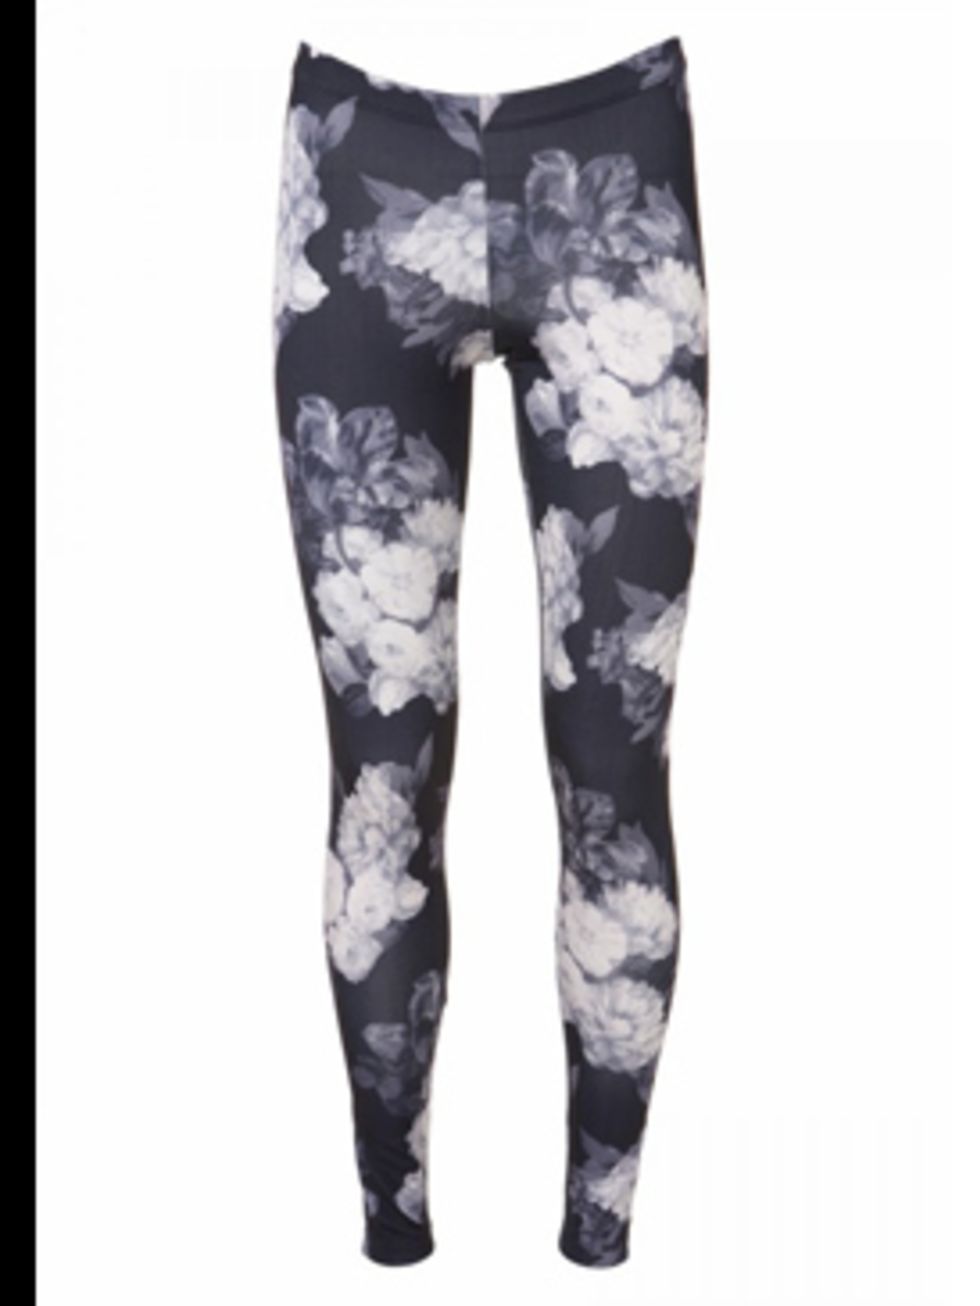 <p>Digital floral print leggings, £20, by <a href="http://www.topshop.com/webapp/wcs/stores/servlet/TopCategoriesDisplay?storeId=12556&amp;catalogId=19551">Topshop</a></p>